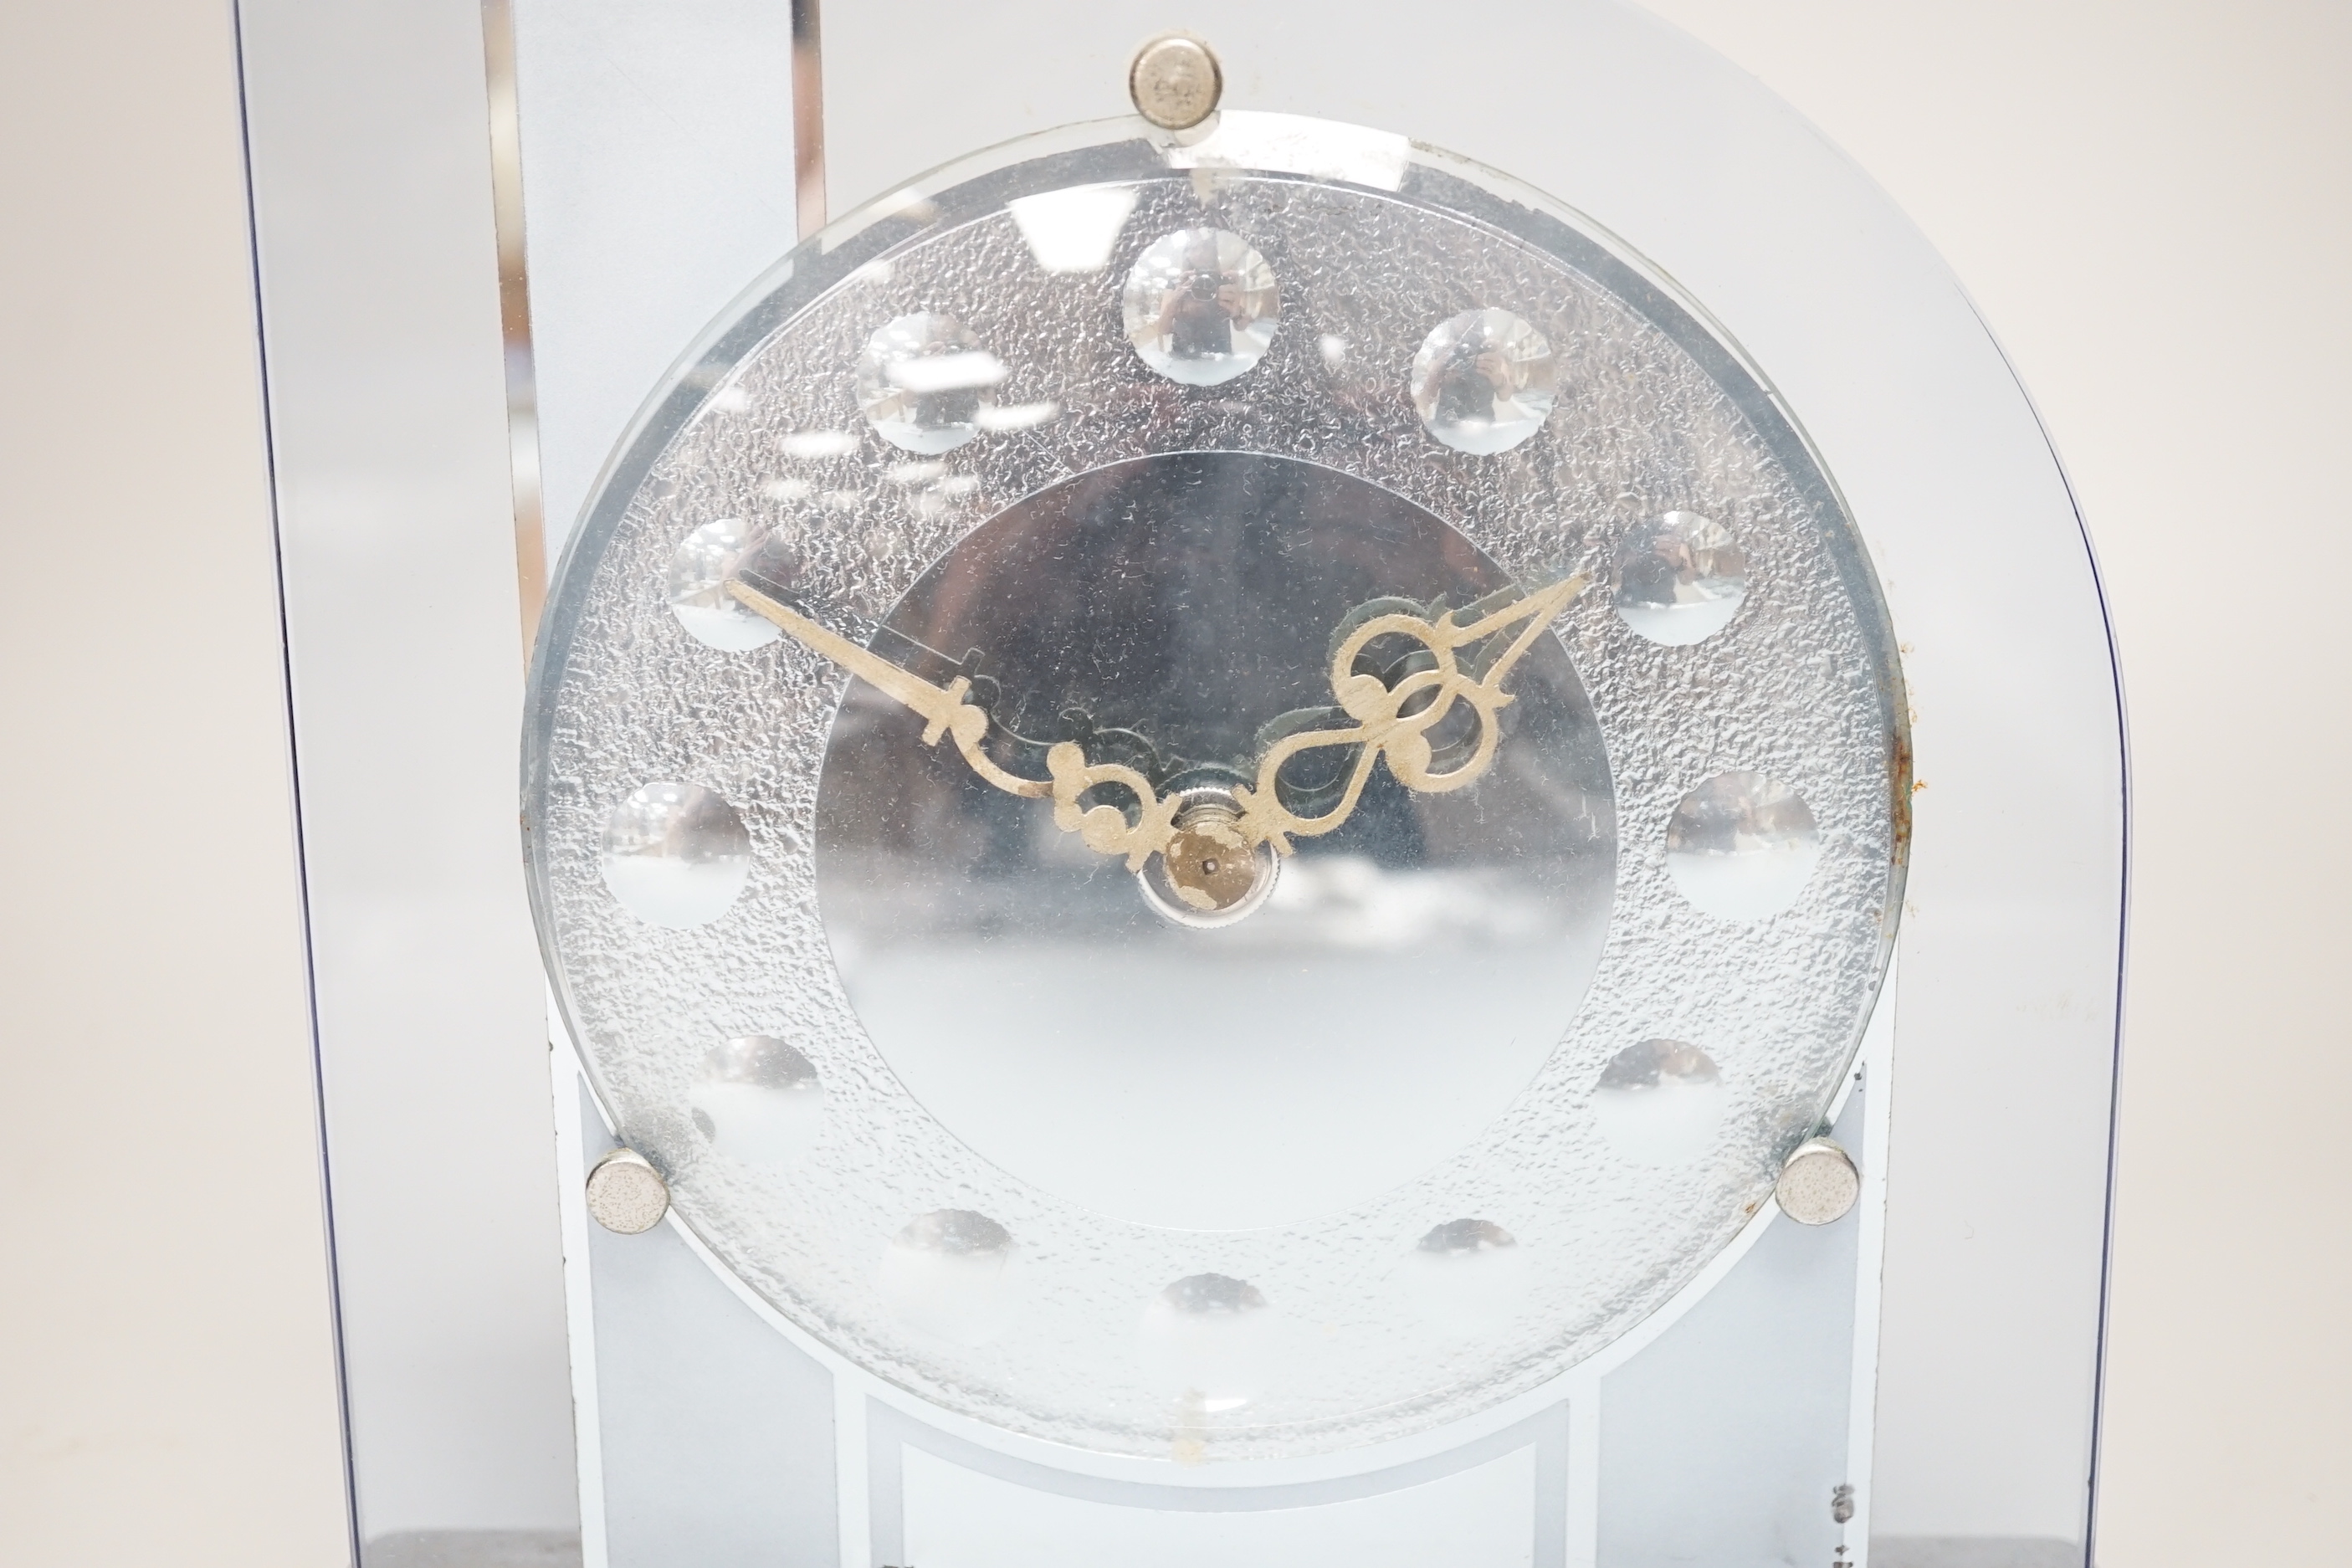 An Art Deco chrome and decorative glass mantel clock, 21cm high